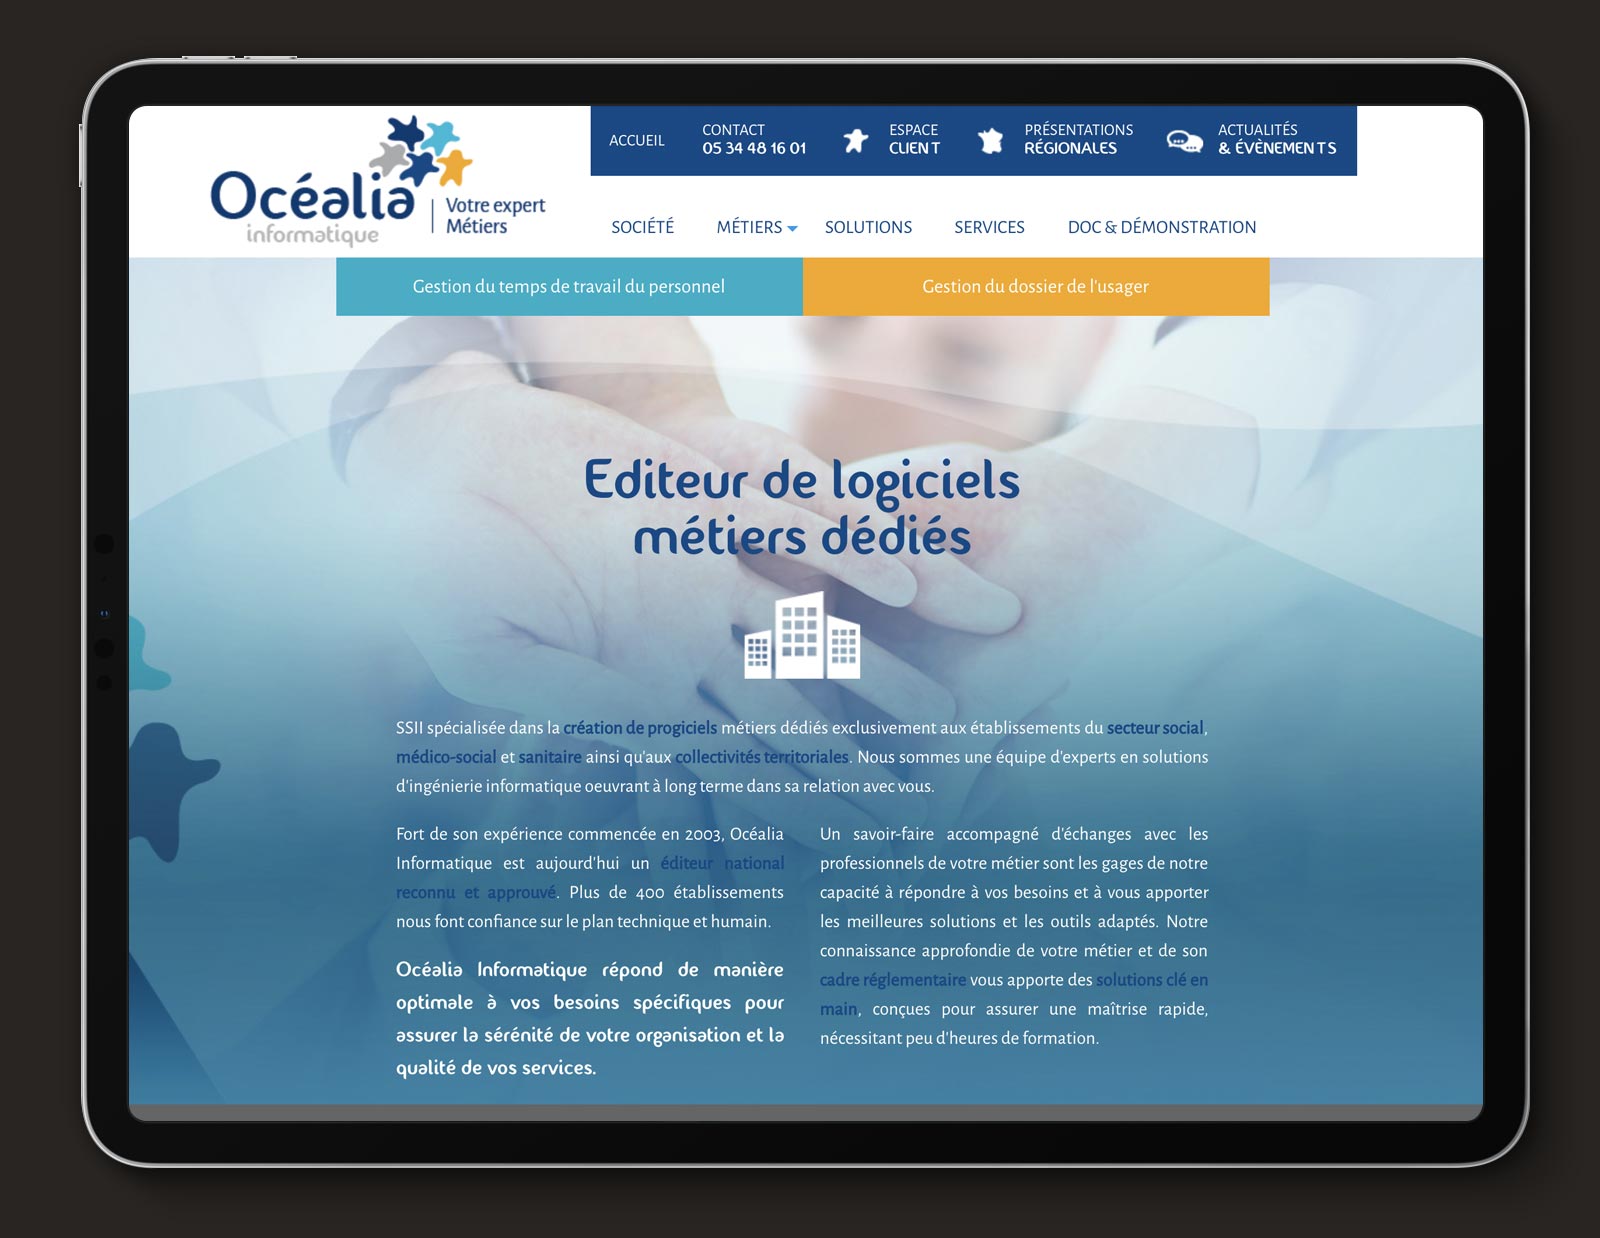 designea-communication-entreprise-site-web-style-corporate-ocealia3.jpg